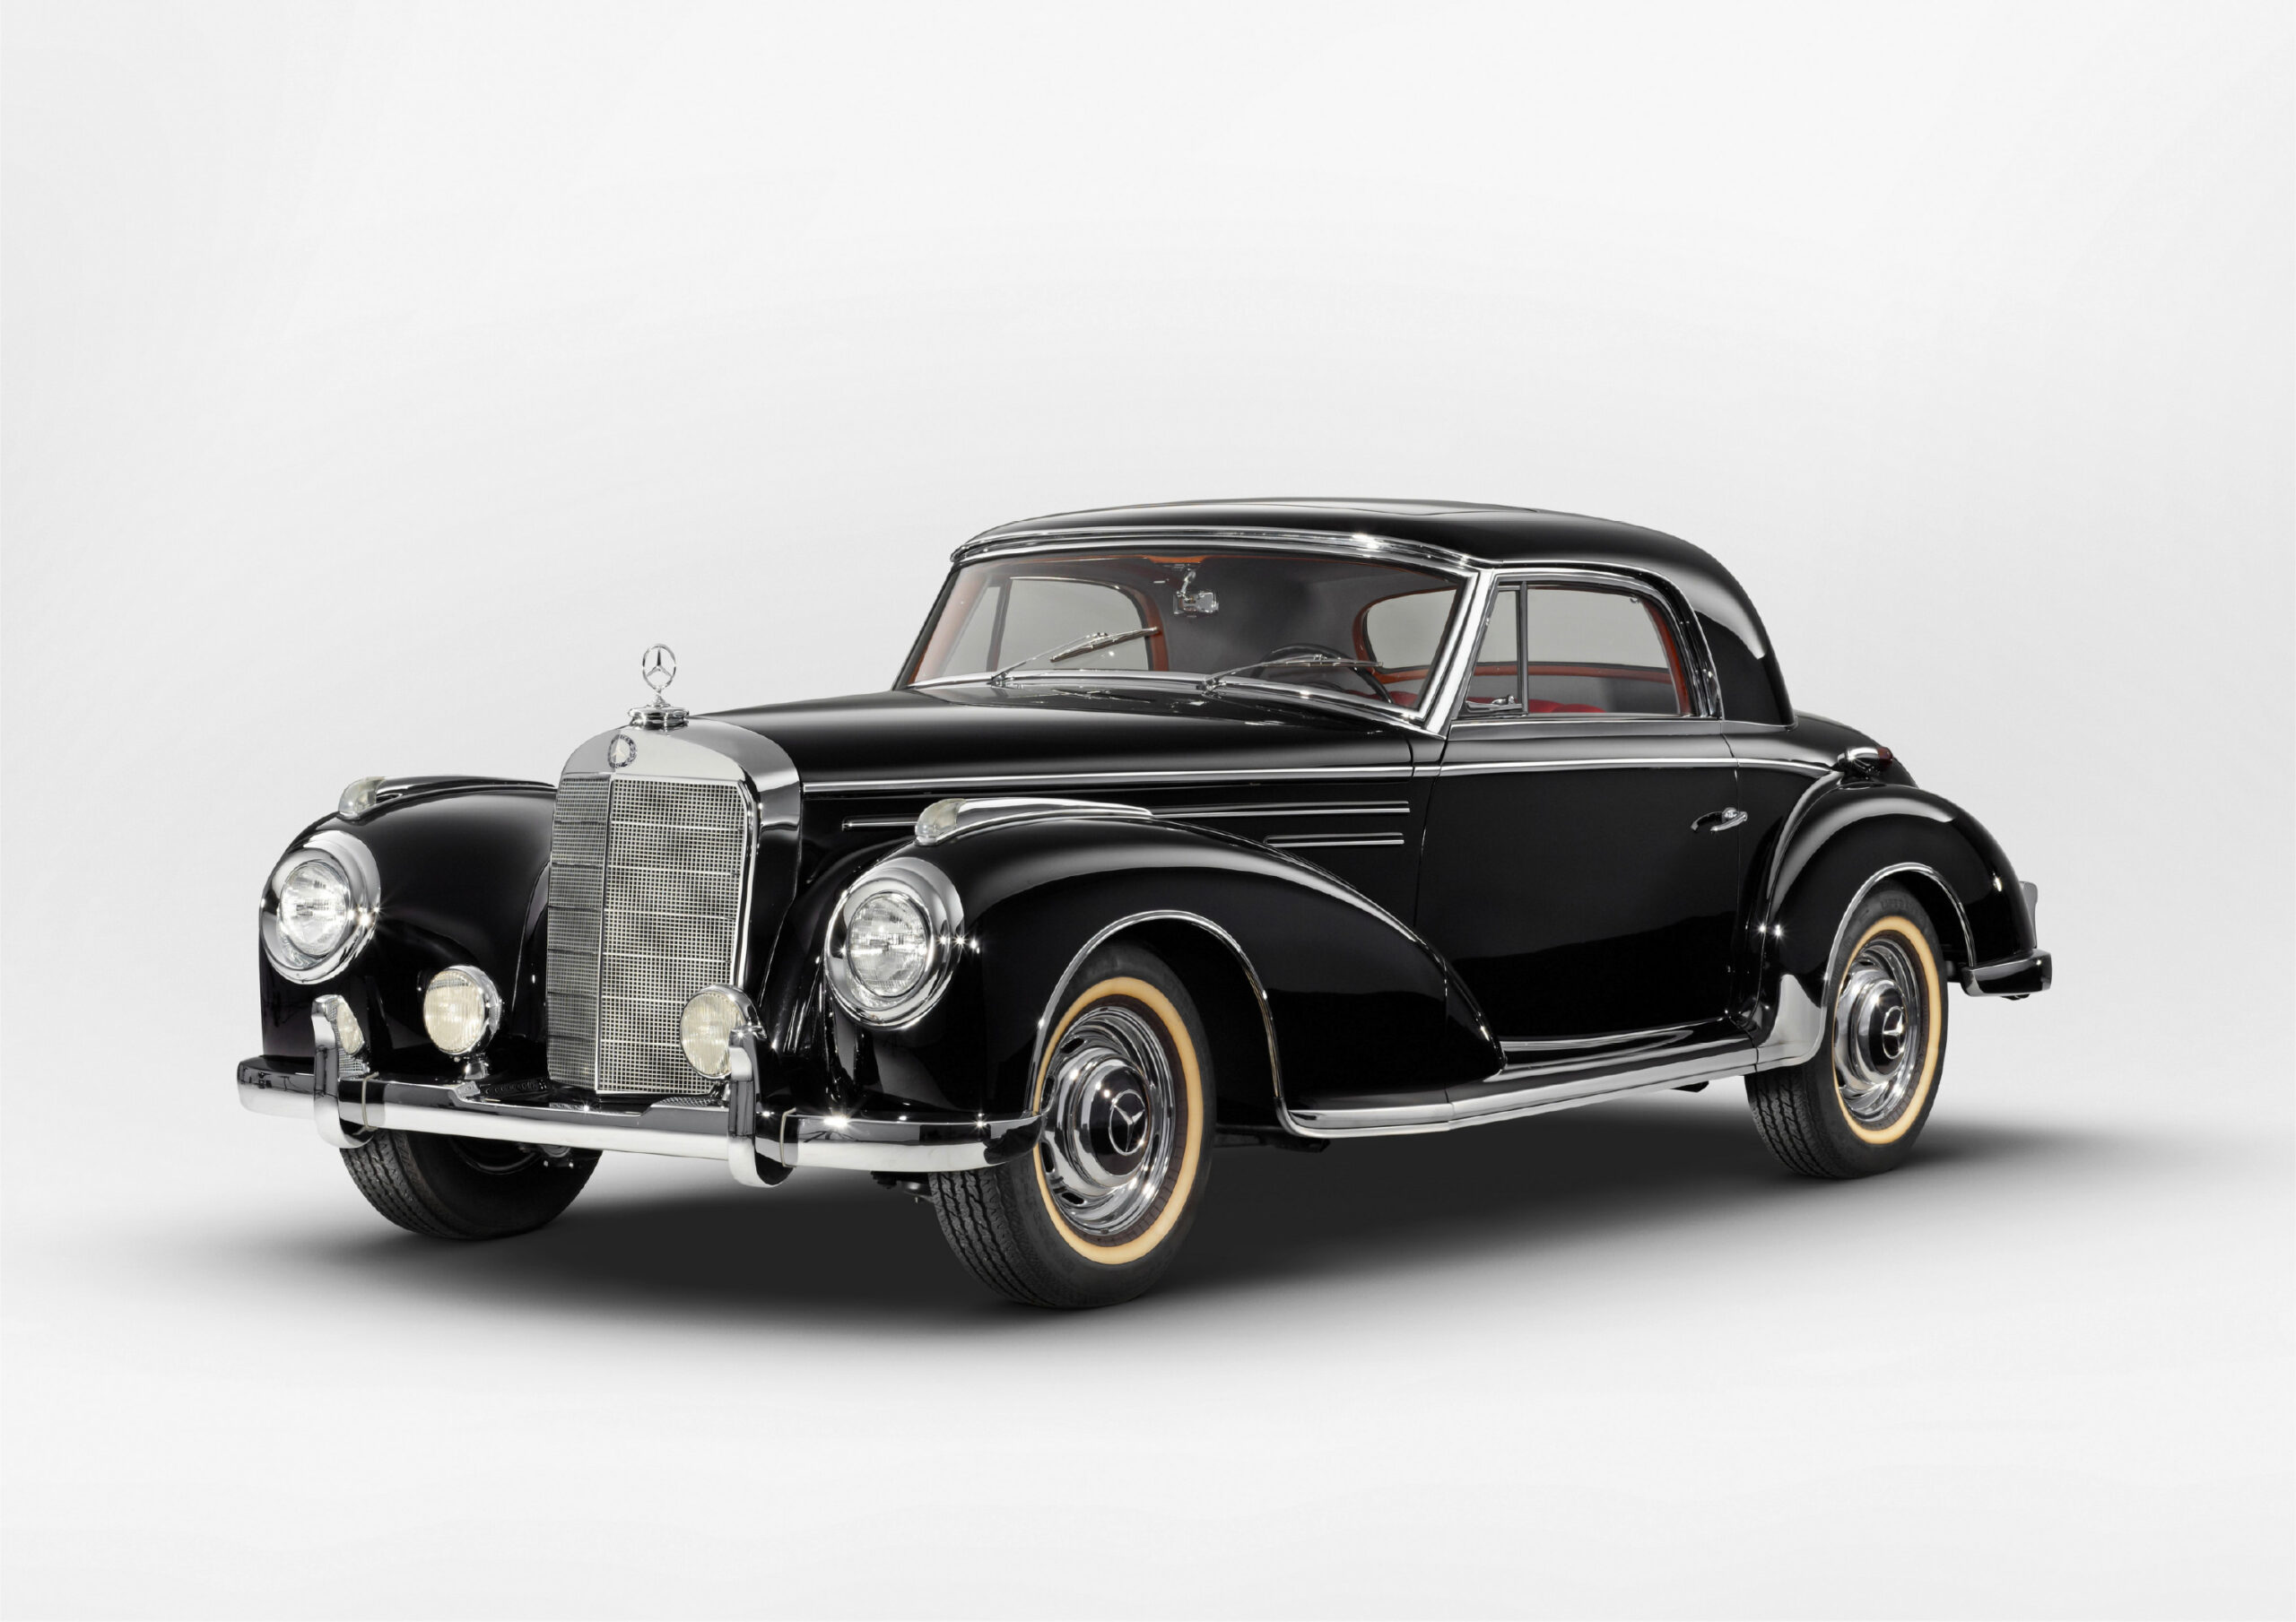 Mercedes-Benz 300 Sc Coupe of Kolaha Collection Vintage Cars